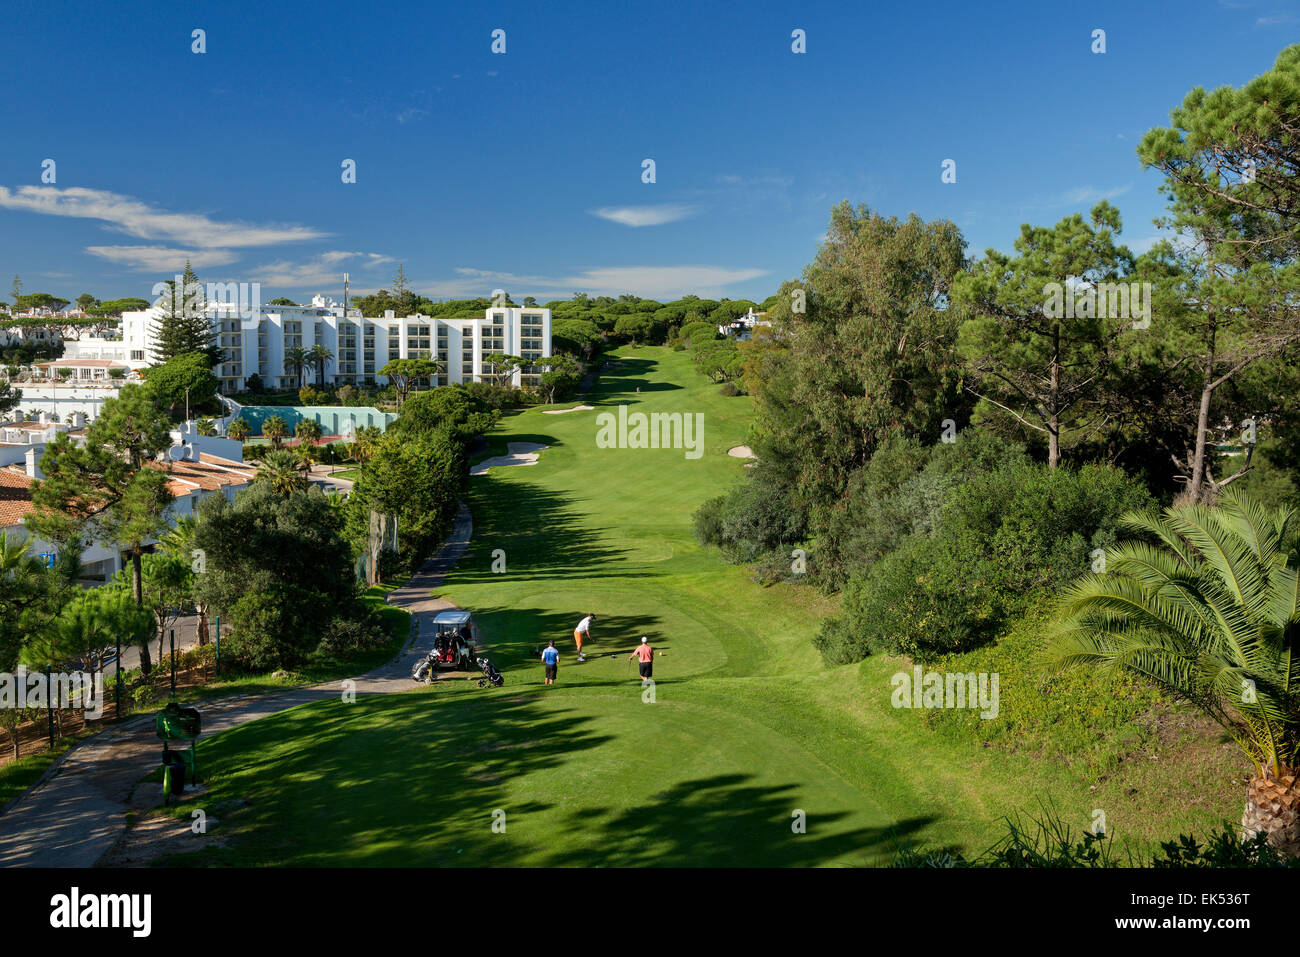 Portugal Vale do Lobo Royal golf course, 17th hole Stock Photo - Alamy